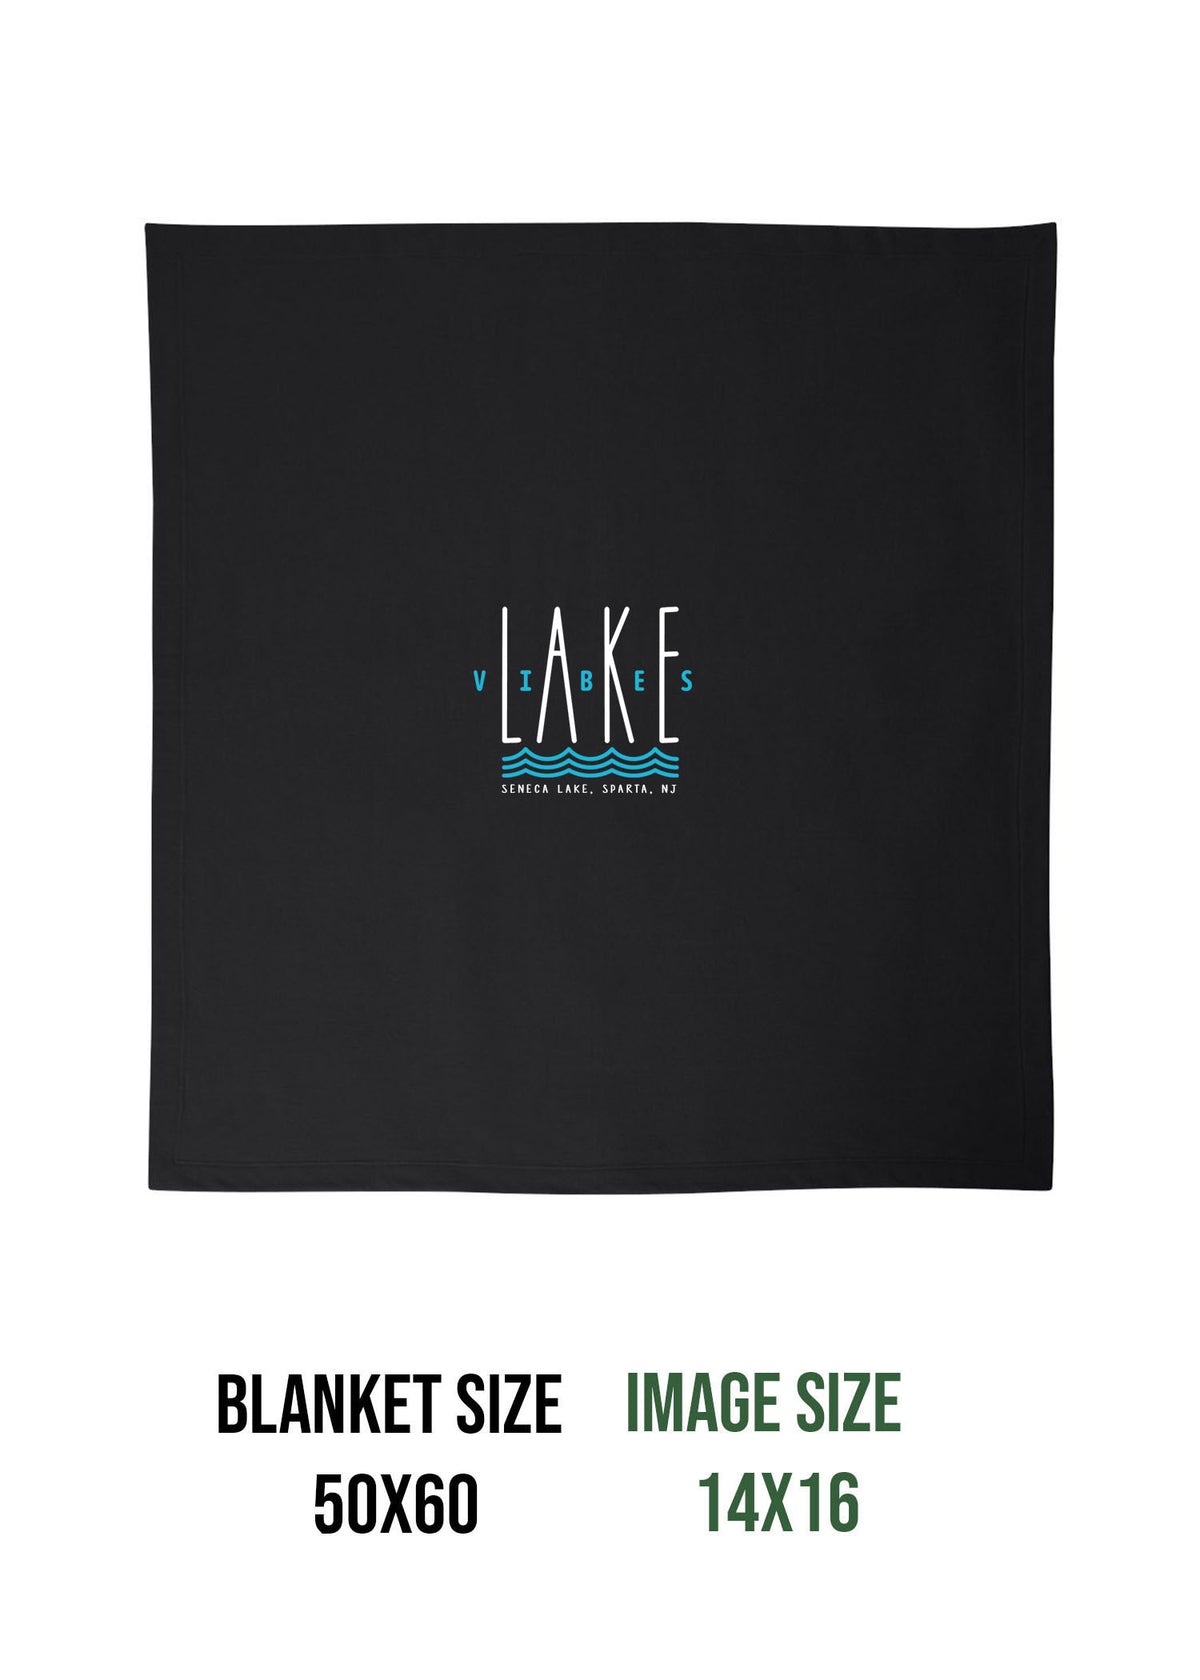 Seneca Lake Design 2 Blanket